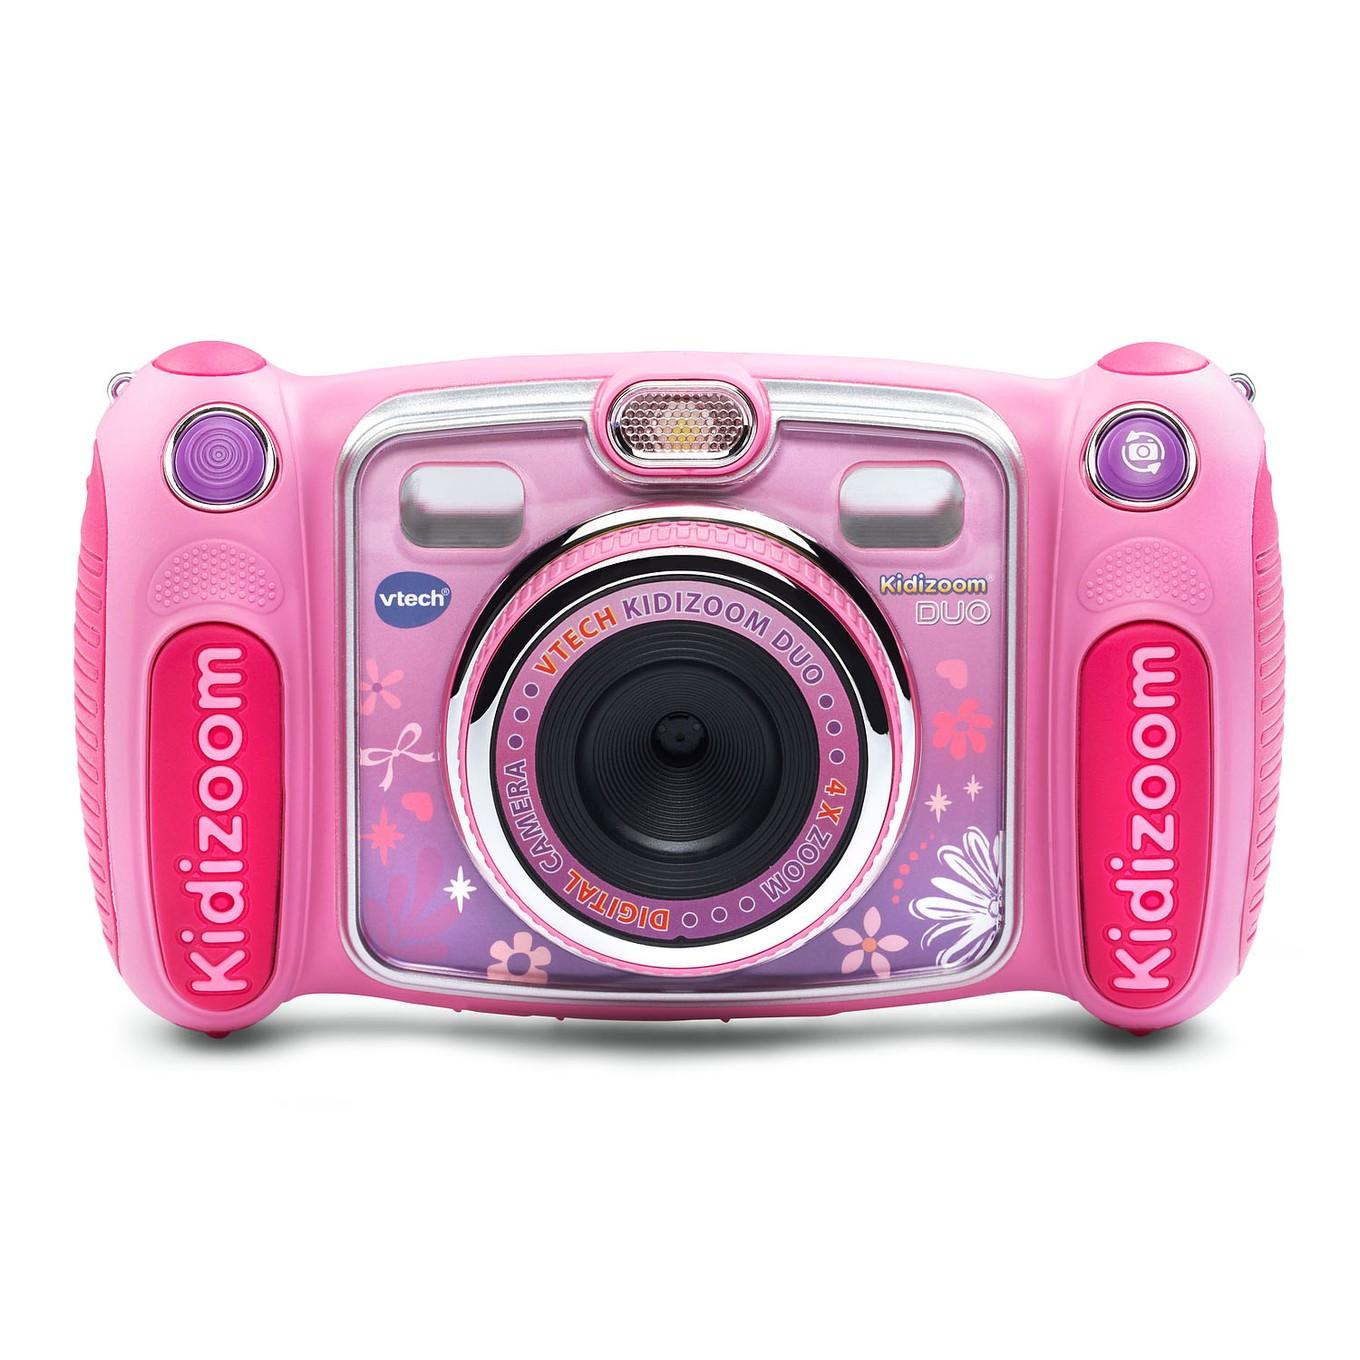 Vtech Kidizoom DUO 5.0 fotocamera digitale rosa Scatola Nuovo Di Zecca in 